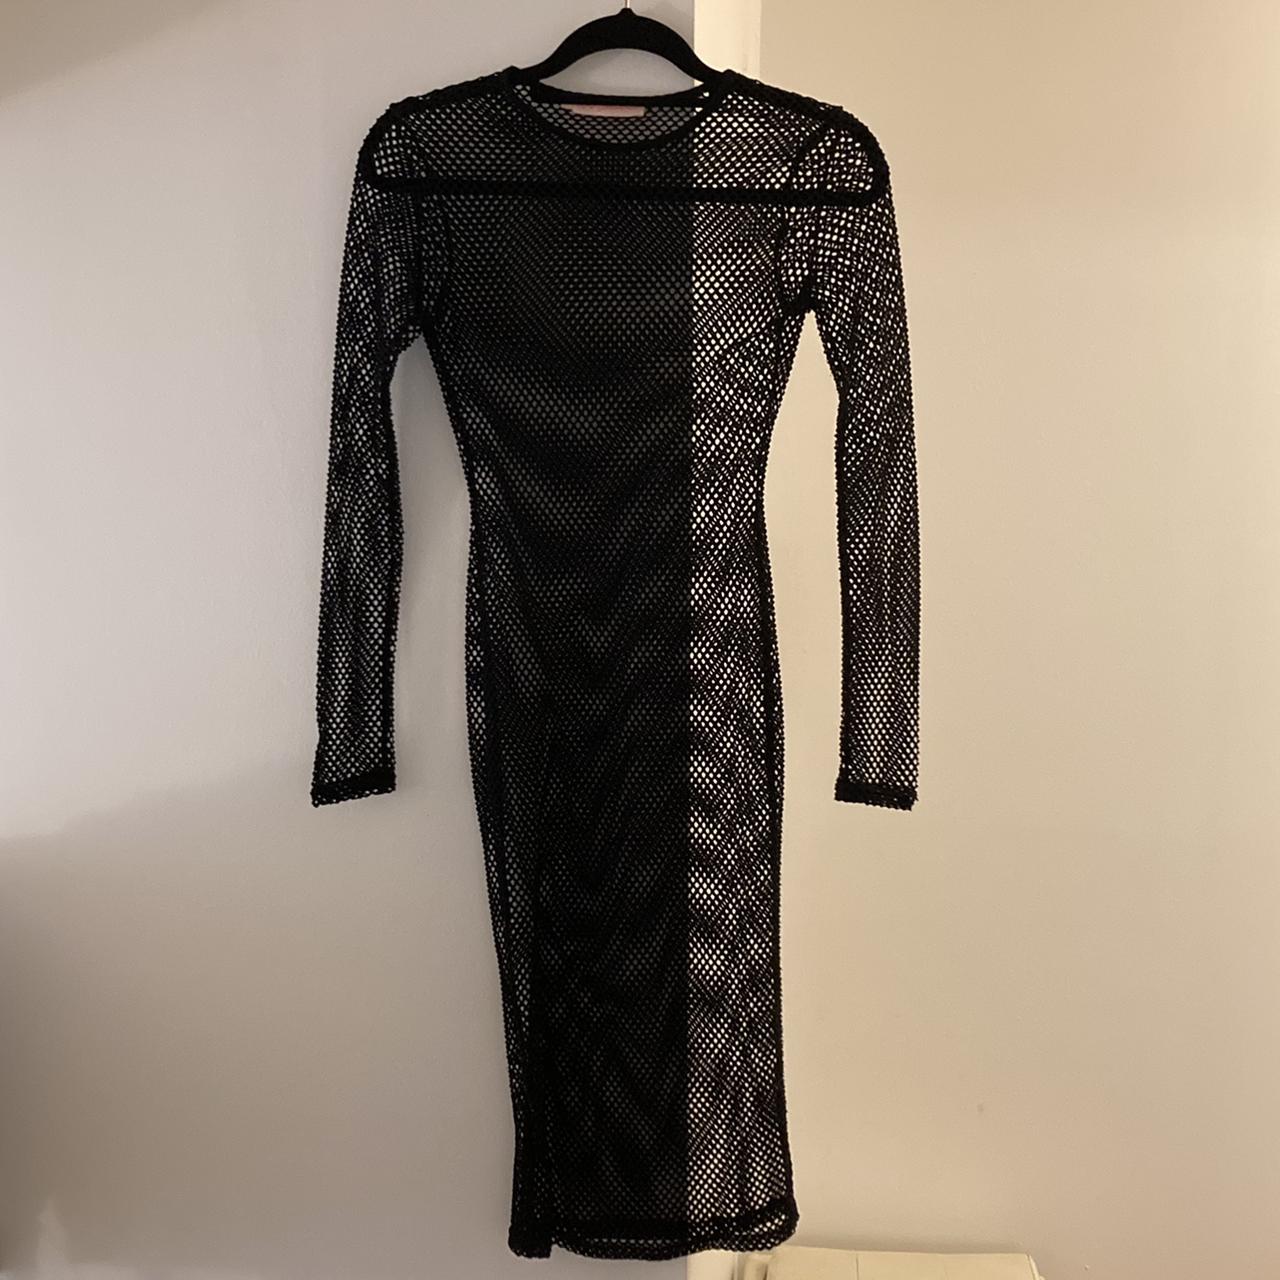 Black fishnet dress 💥 midi length 💥 oh my... - Depop